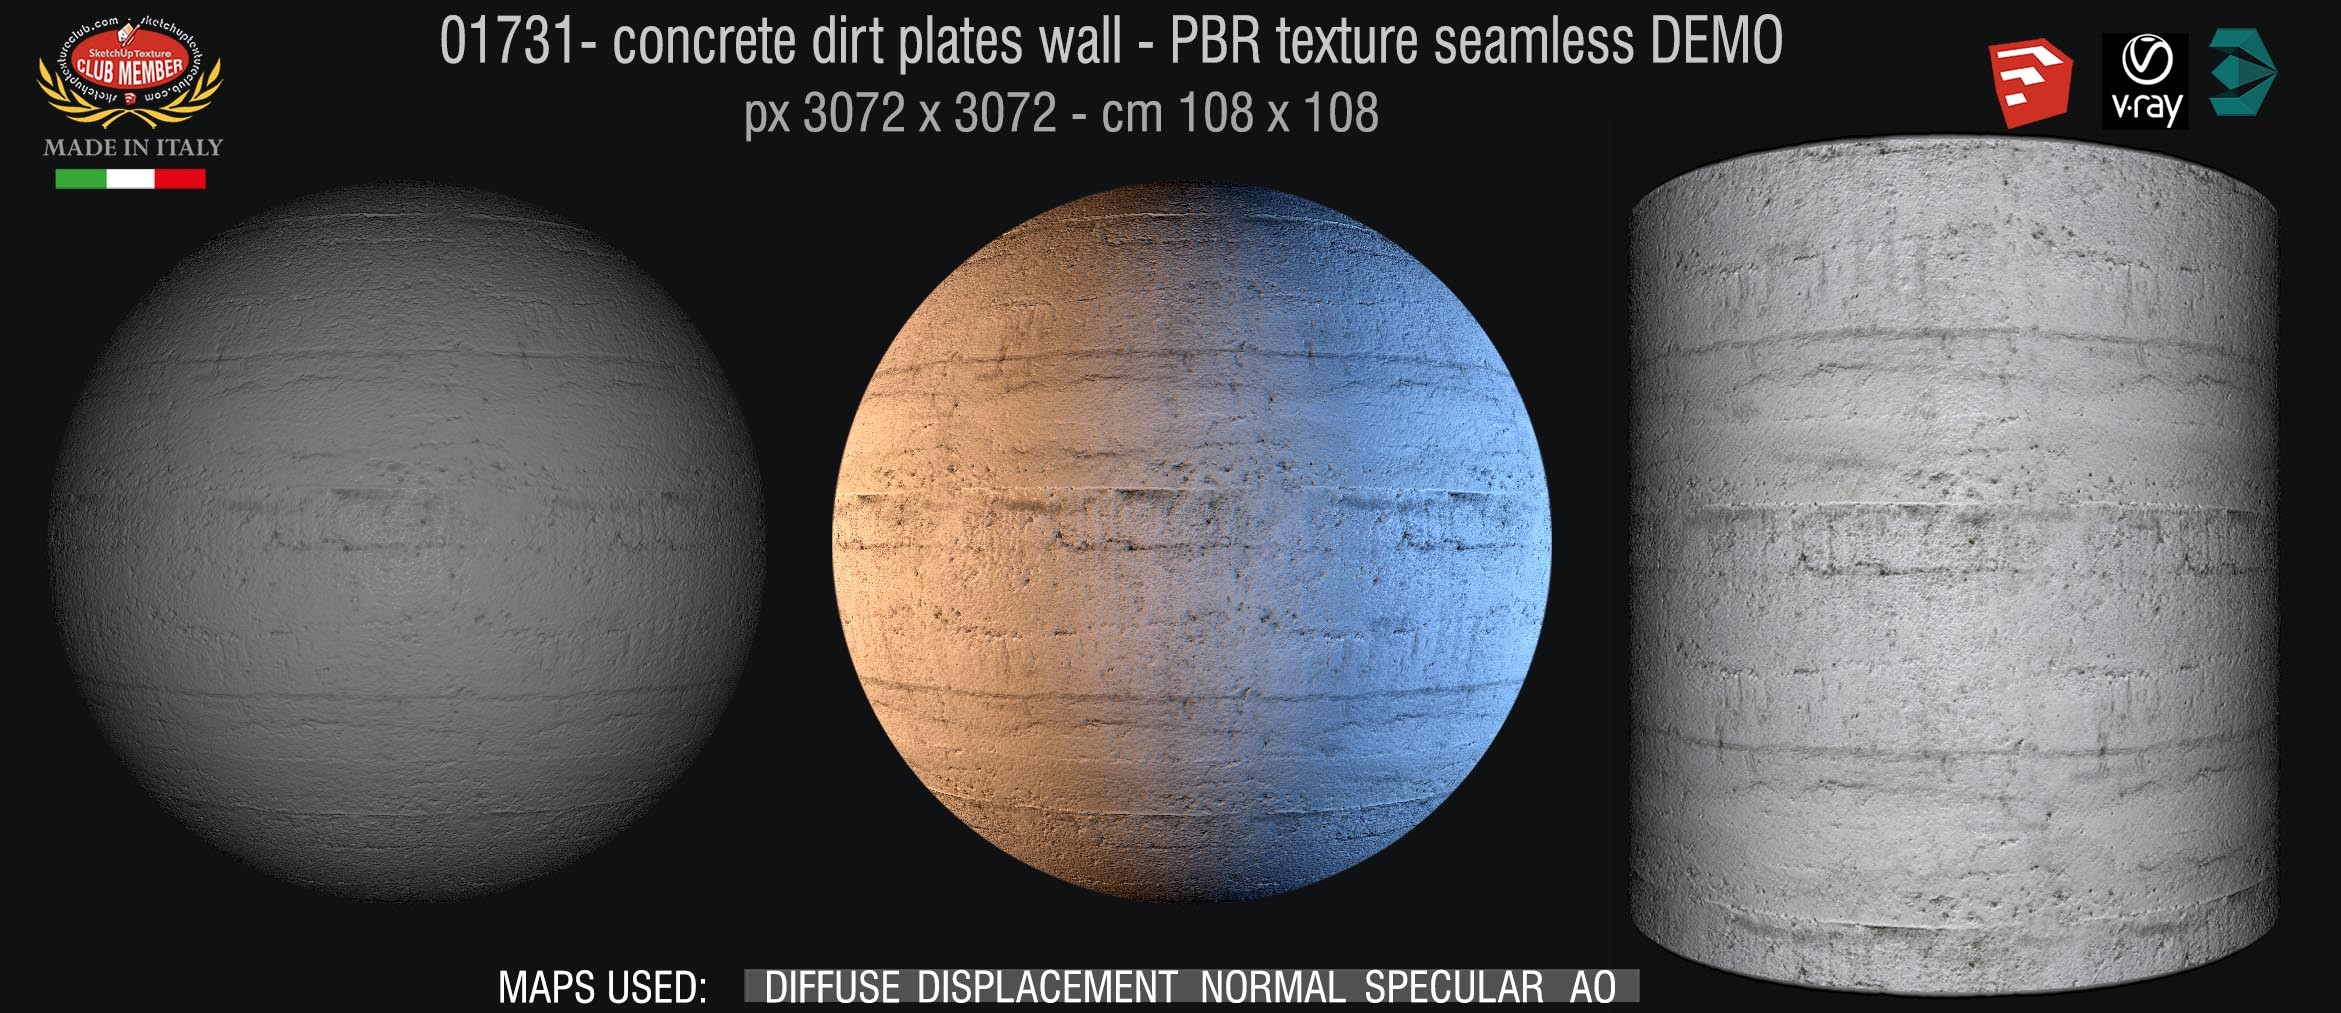 01731 concrete dirt plates wall PBR texture seamless DEMO